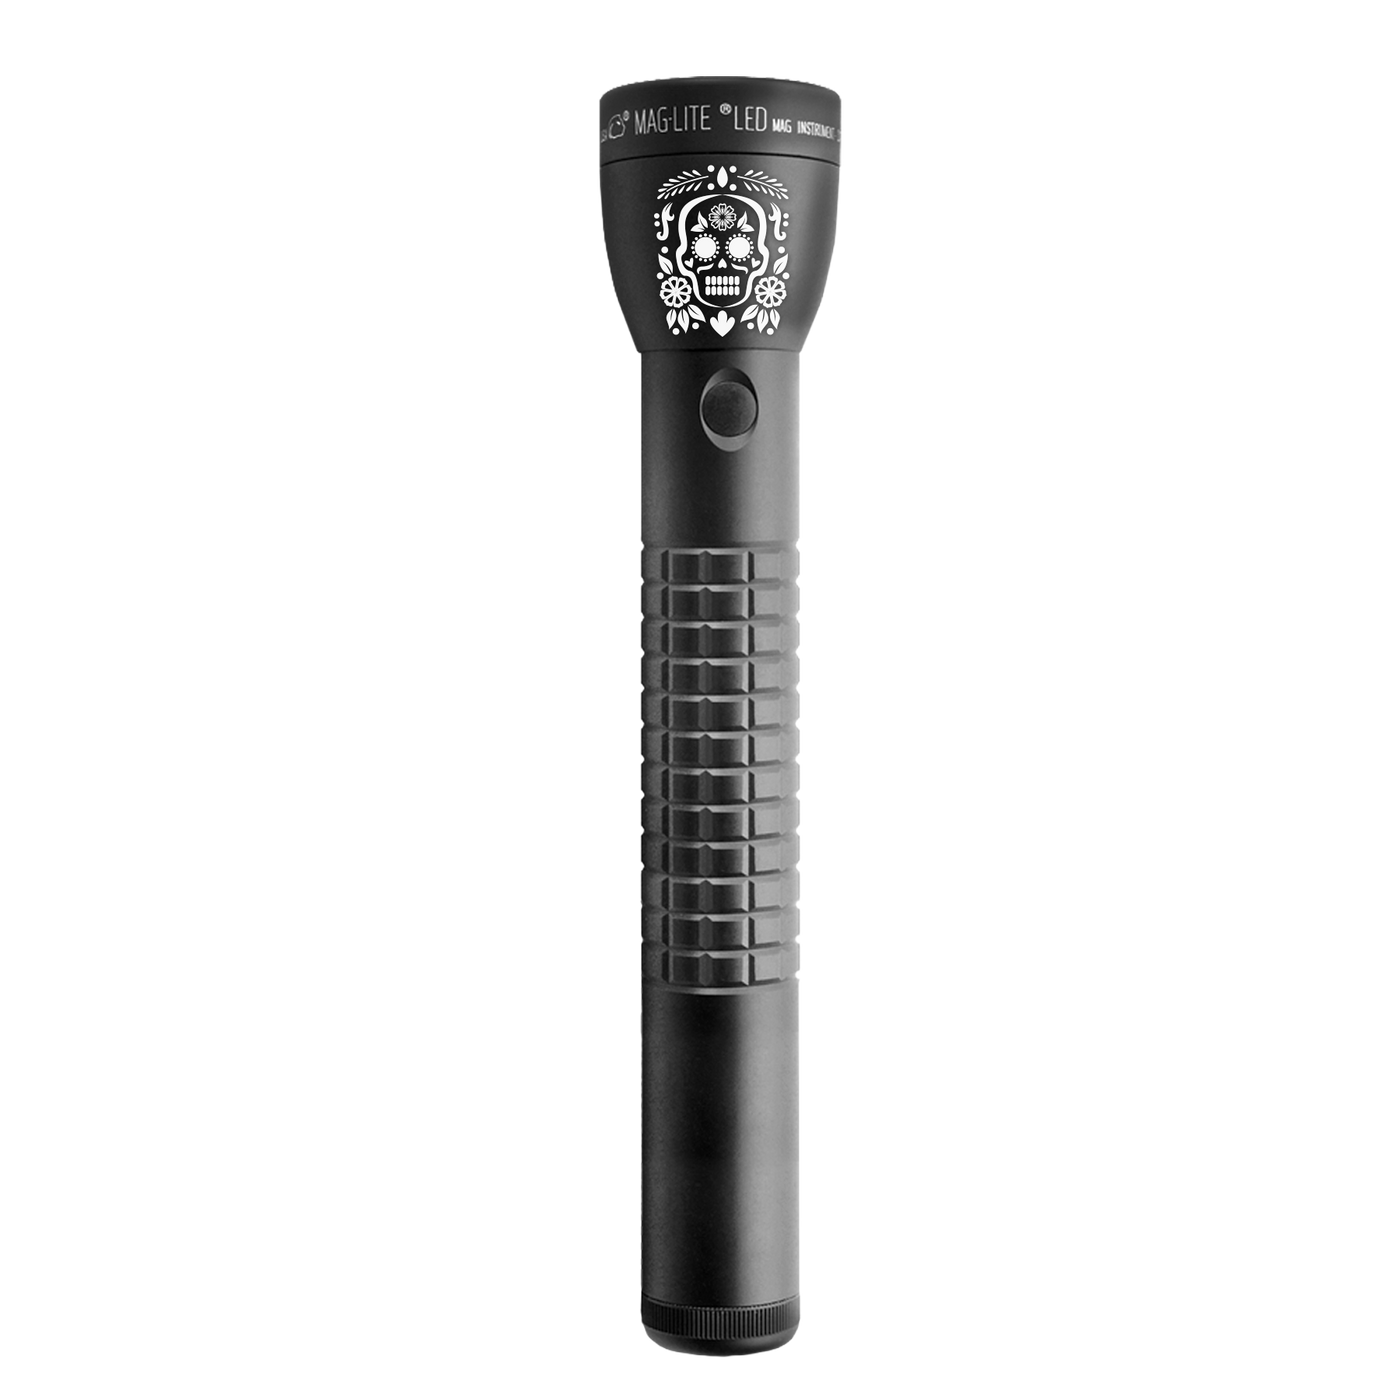 Maglite ML300LX 3-Cell LED Flashlight with Unique Dia De Los Muertos laser engraving